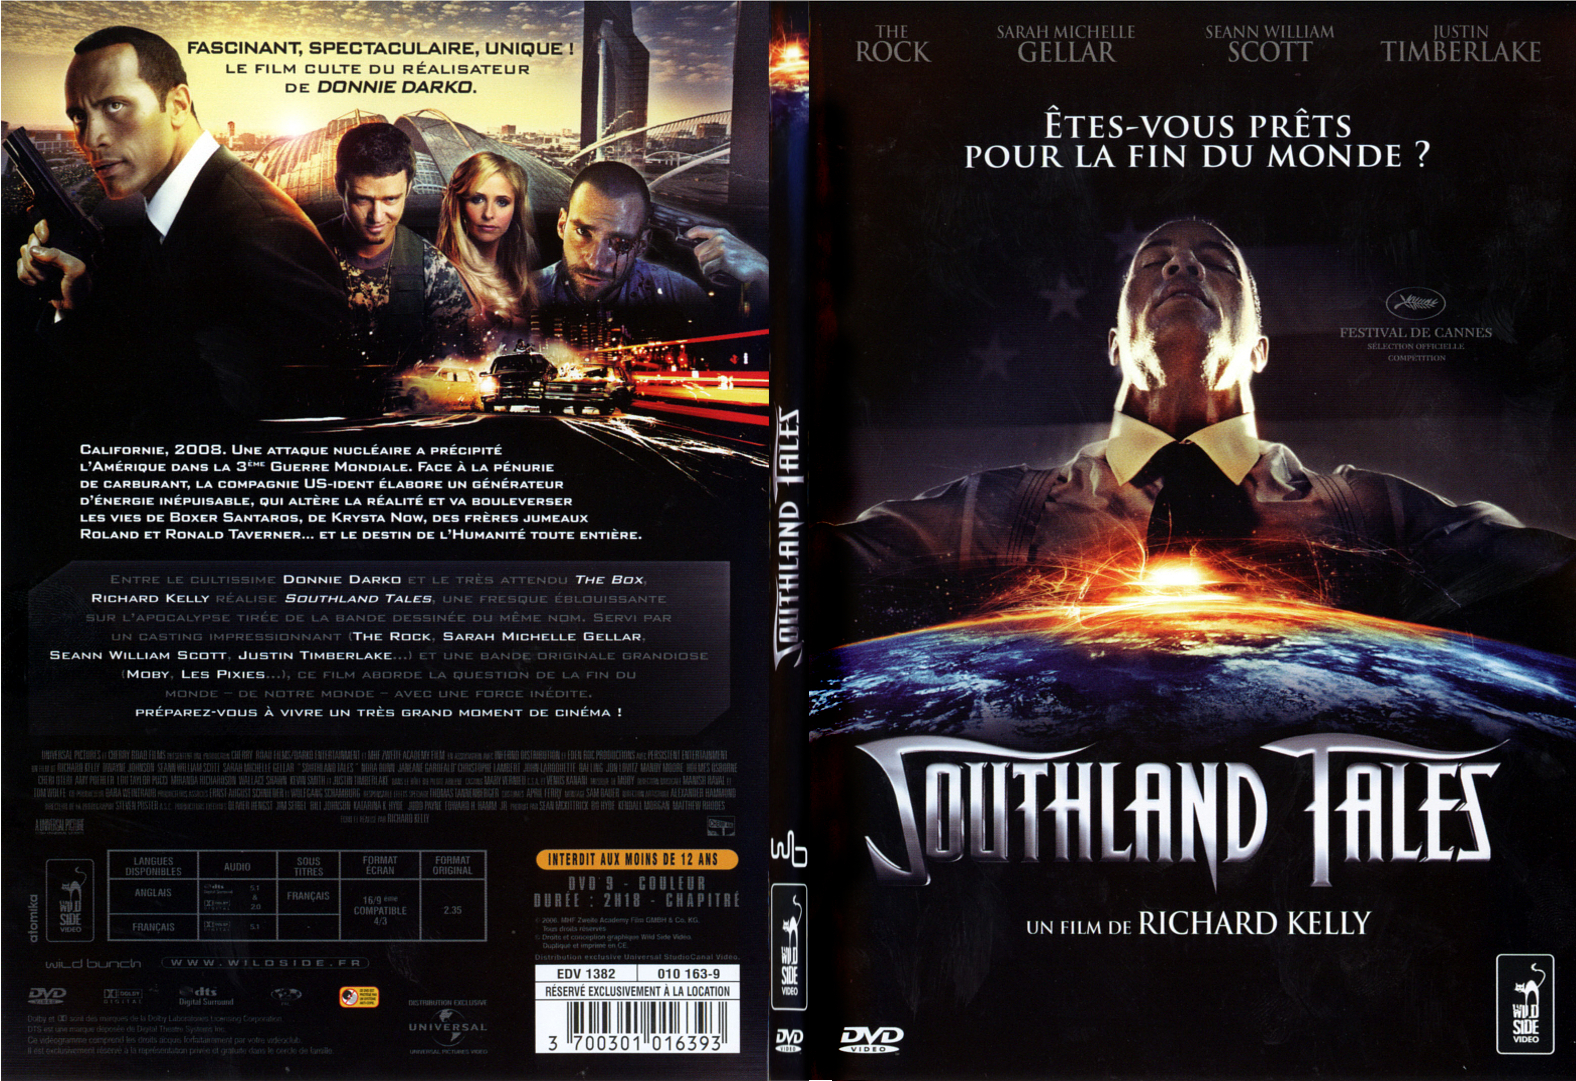 Jaquette DVD Southland tales - SLIM